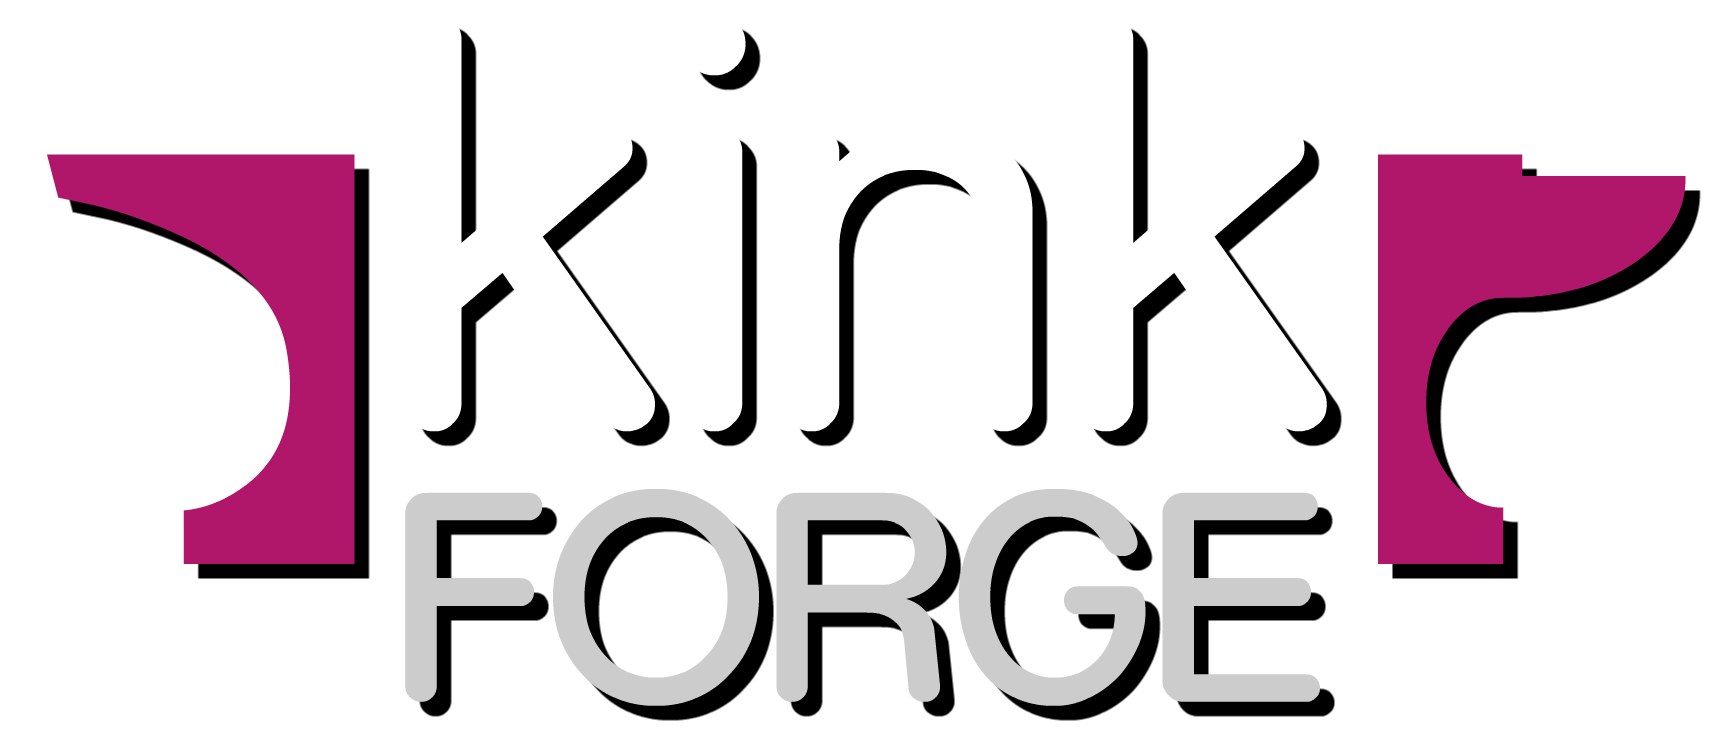 Kink Forge